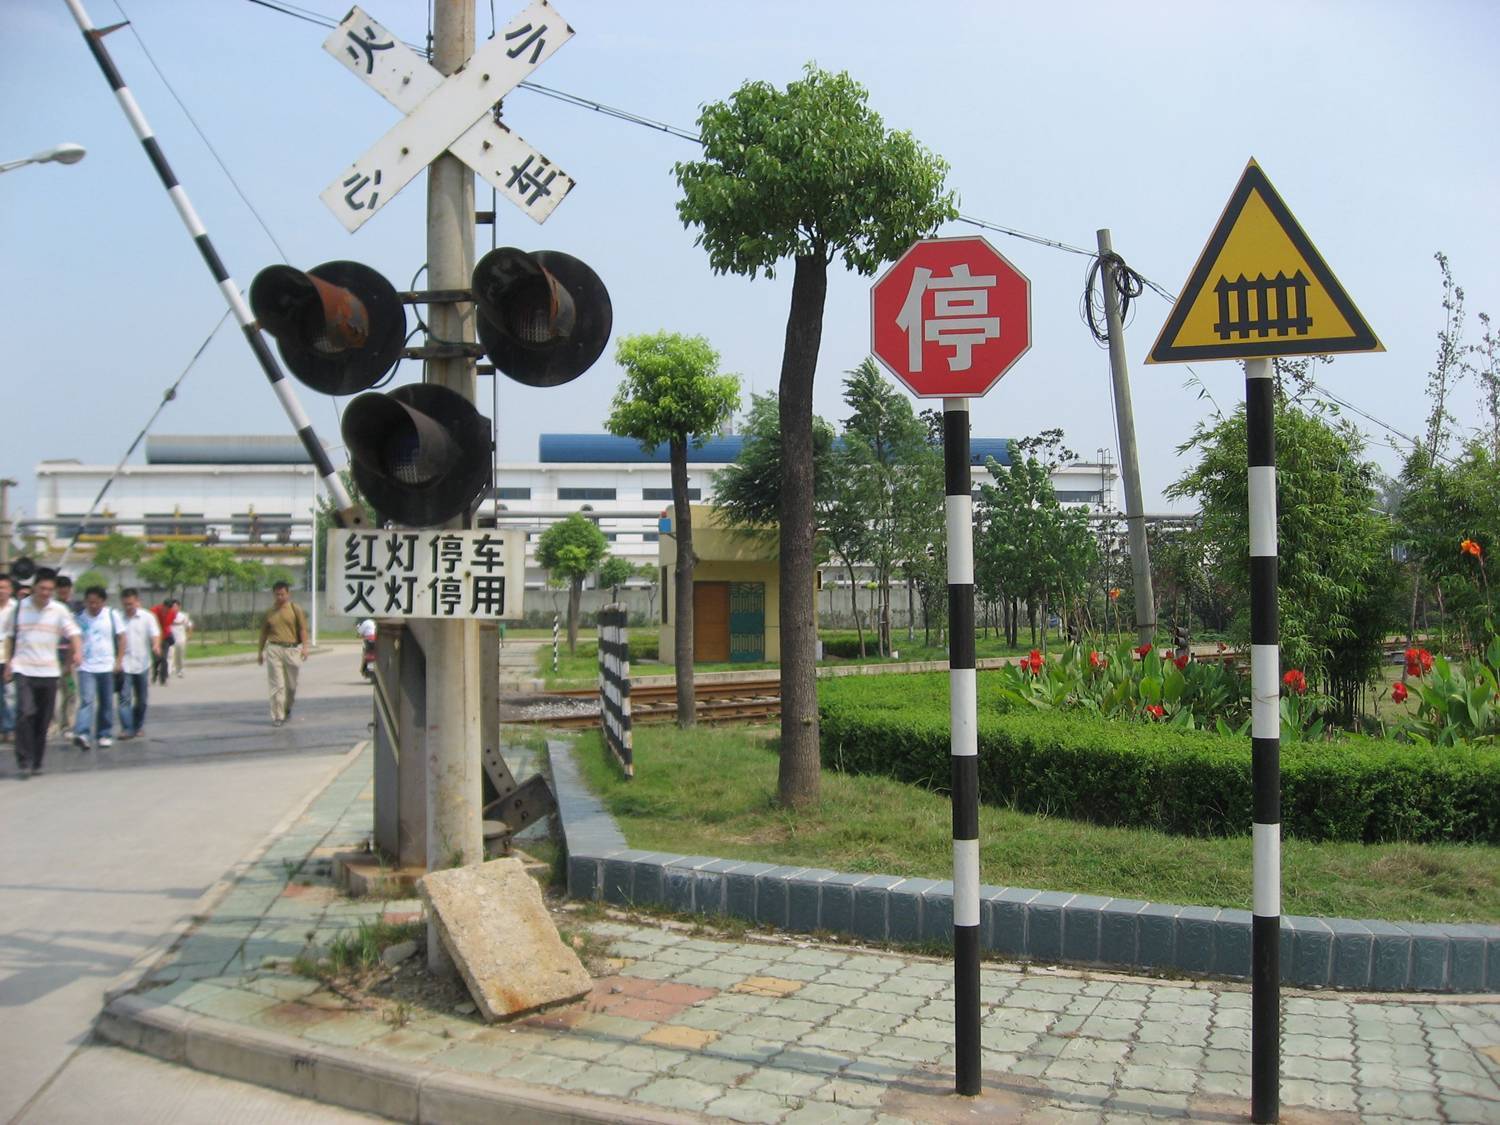 Traffic Lights at a Railway Crossing, Railway Semaphore, Railroad ...